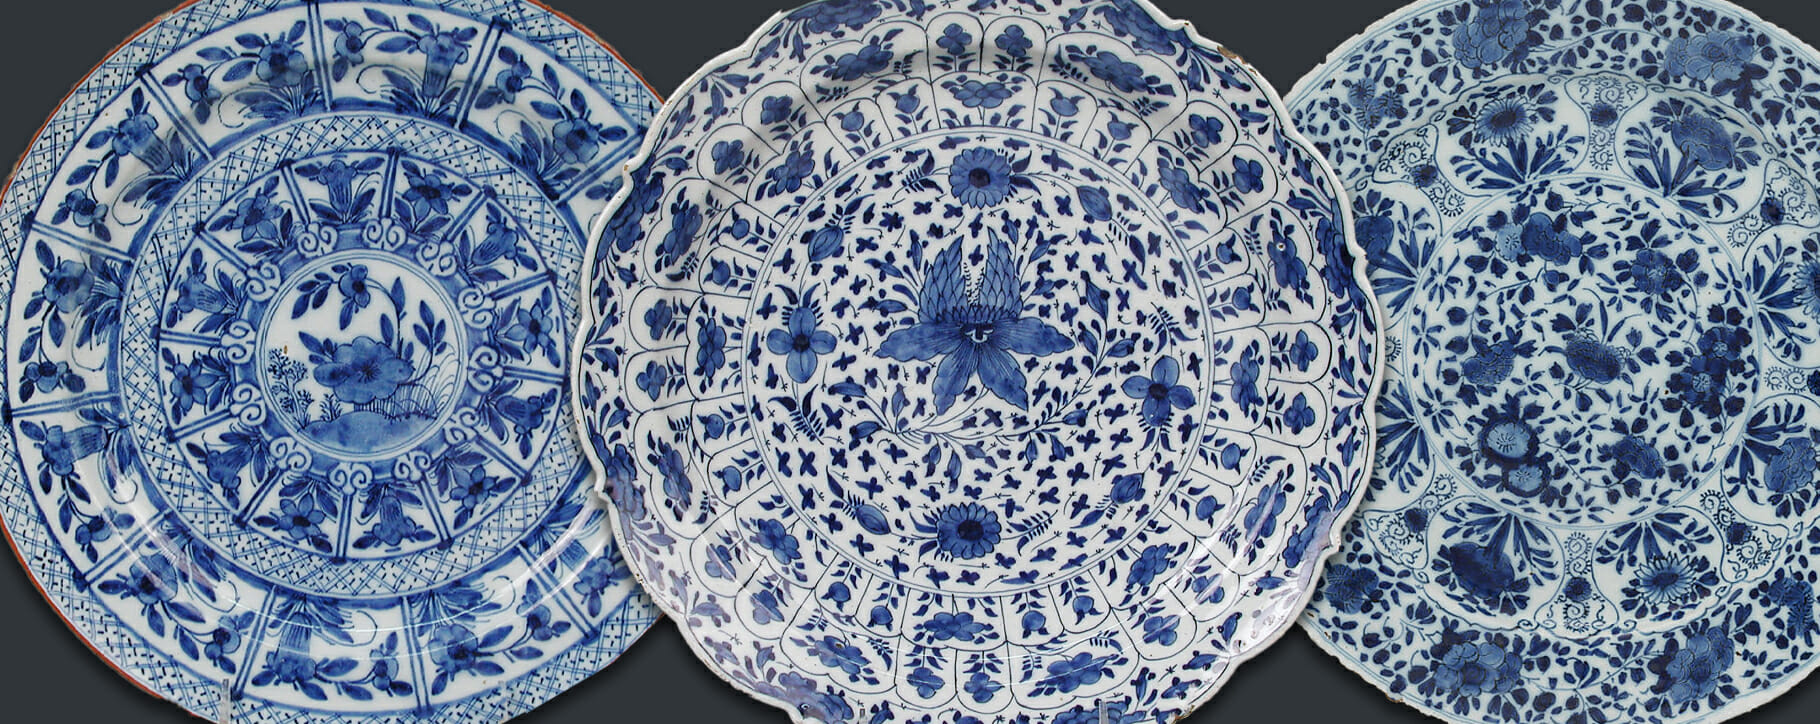 Delft blue plates